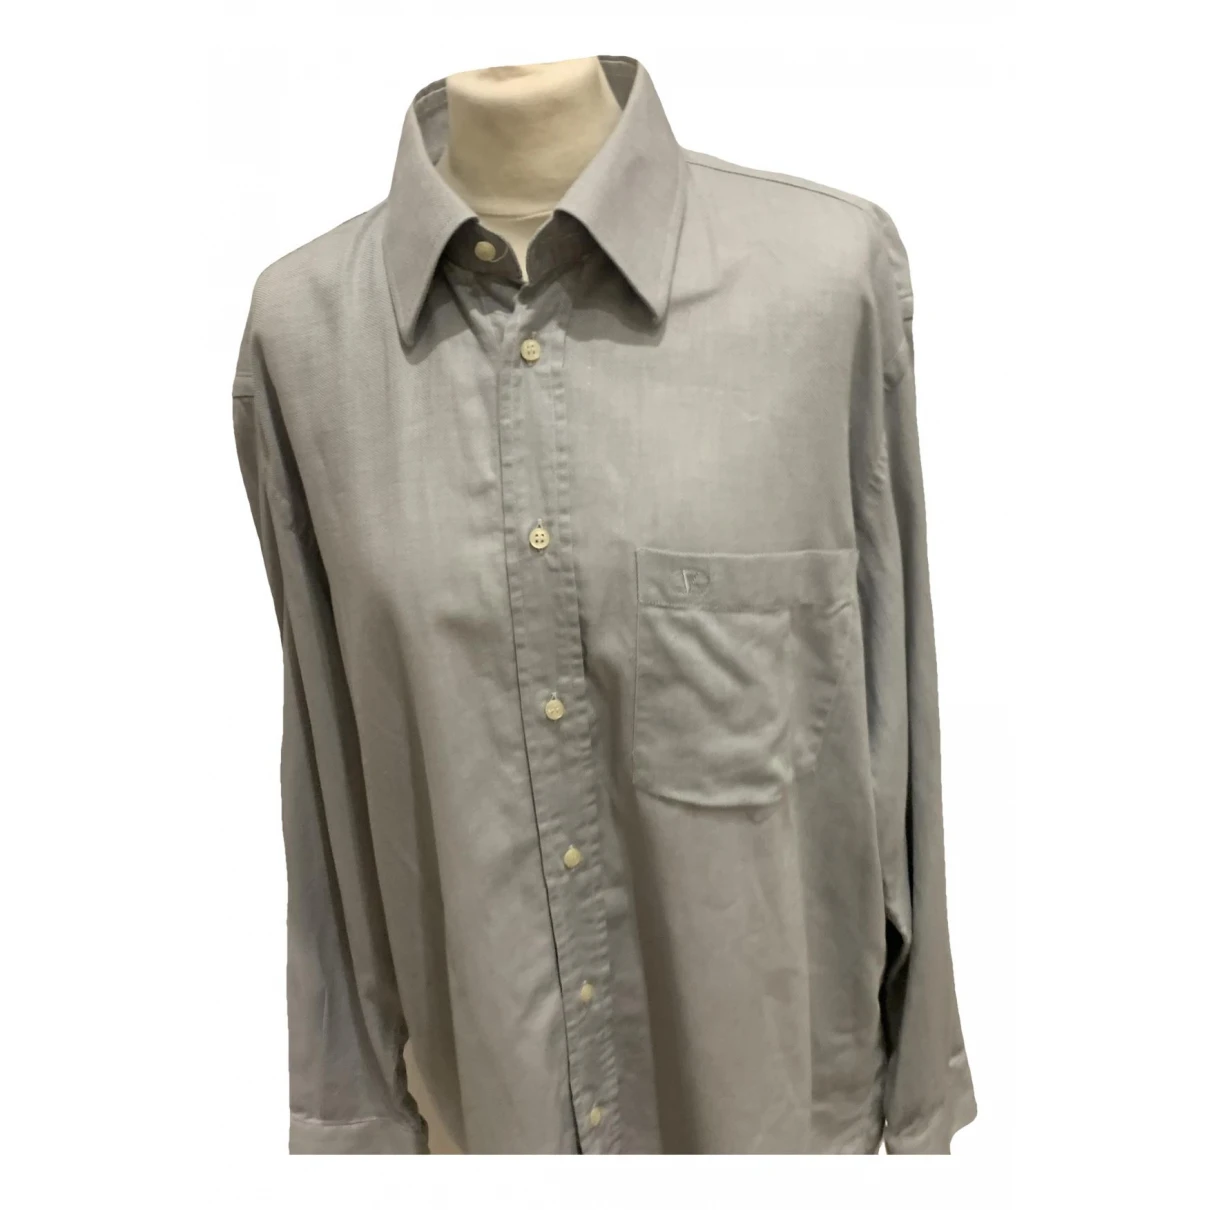 clothing Valentino Garavani shirts for Male Cotton 17 UK - US (tour de cou / collar). Used condition